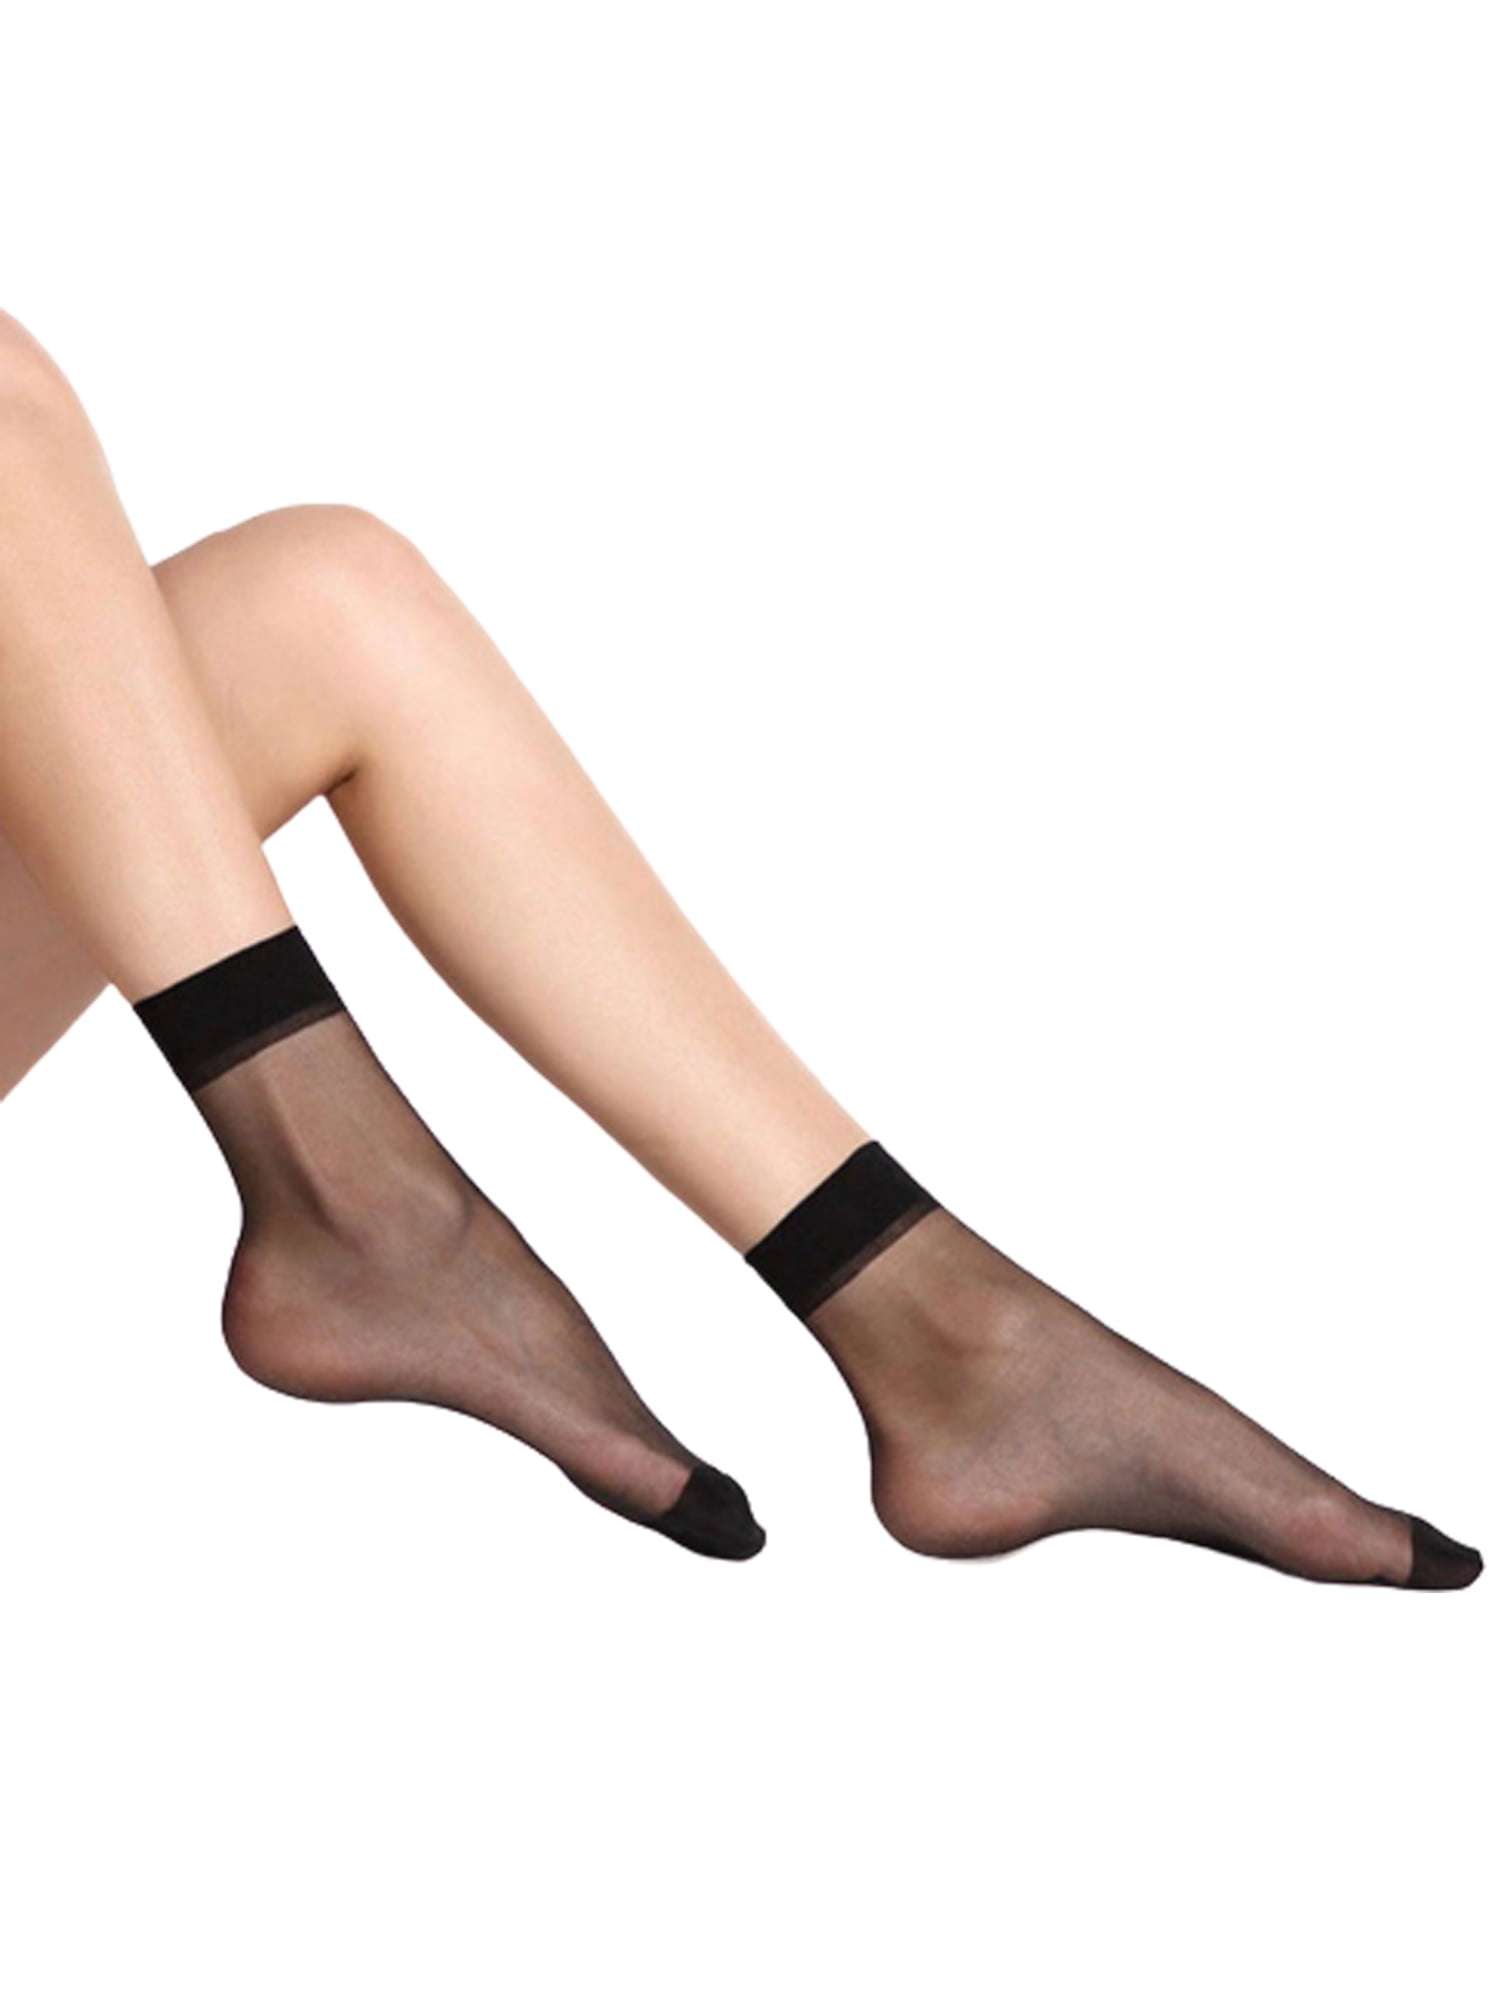 Womens Ankle High Sheer Socks Silky Glitter Transparent Short Stockings Ruffle Lace Socks Anti-Slip Reinforced Toe Casual Crystal Hosiery Dress Sock A 